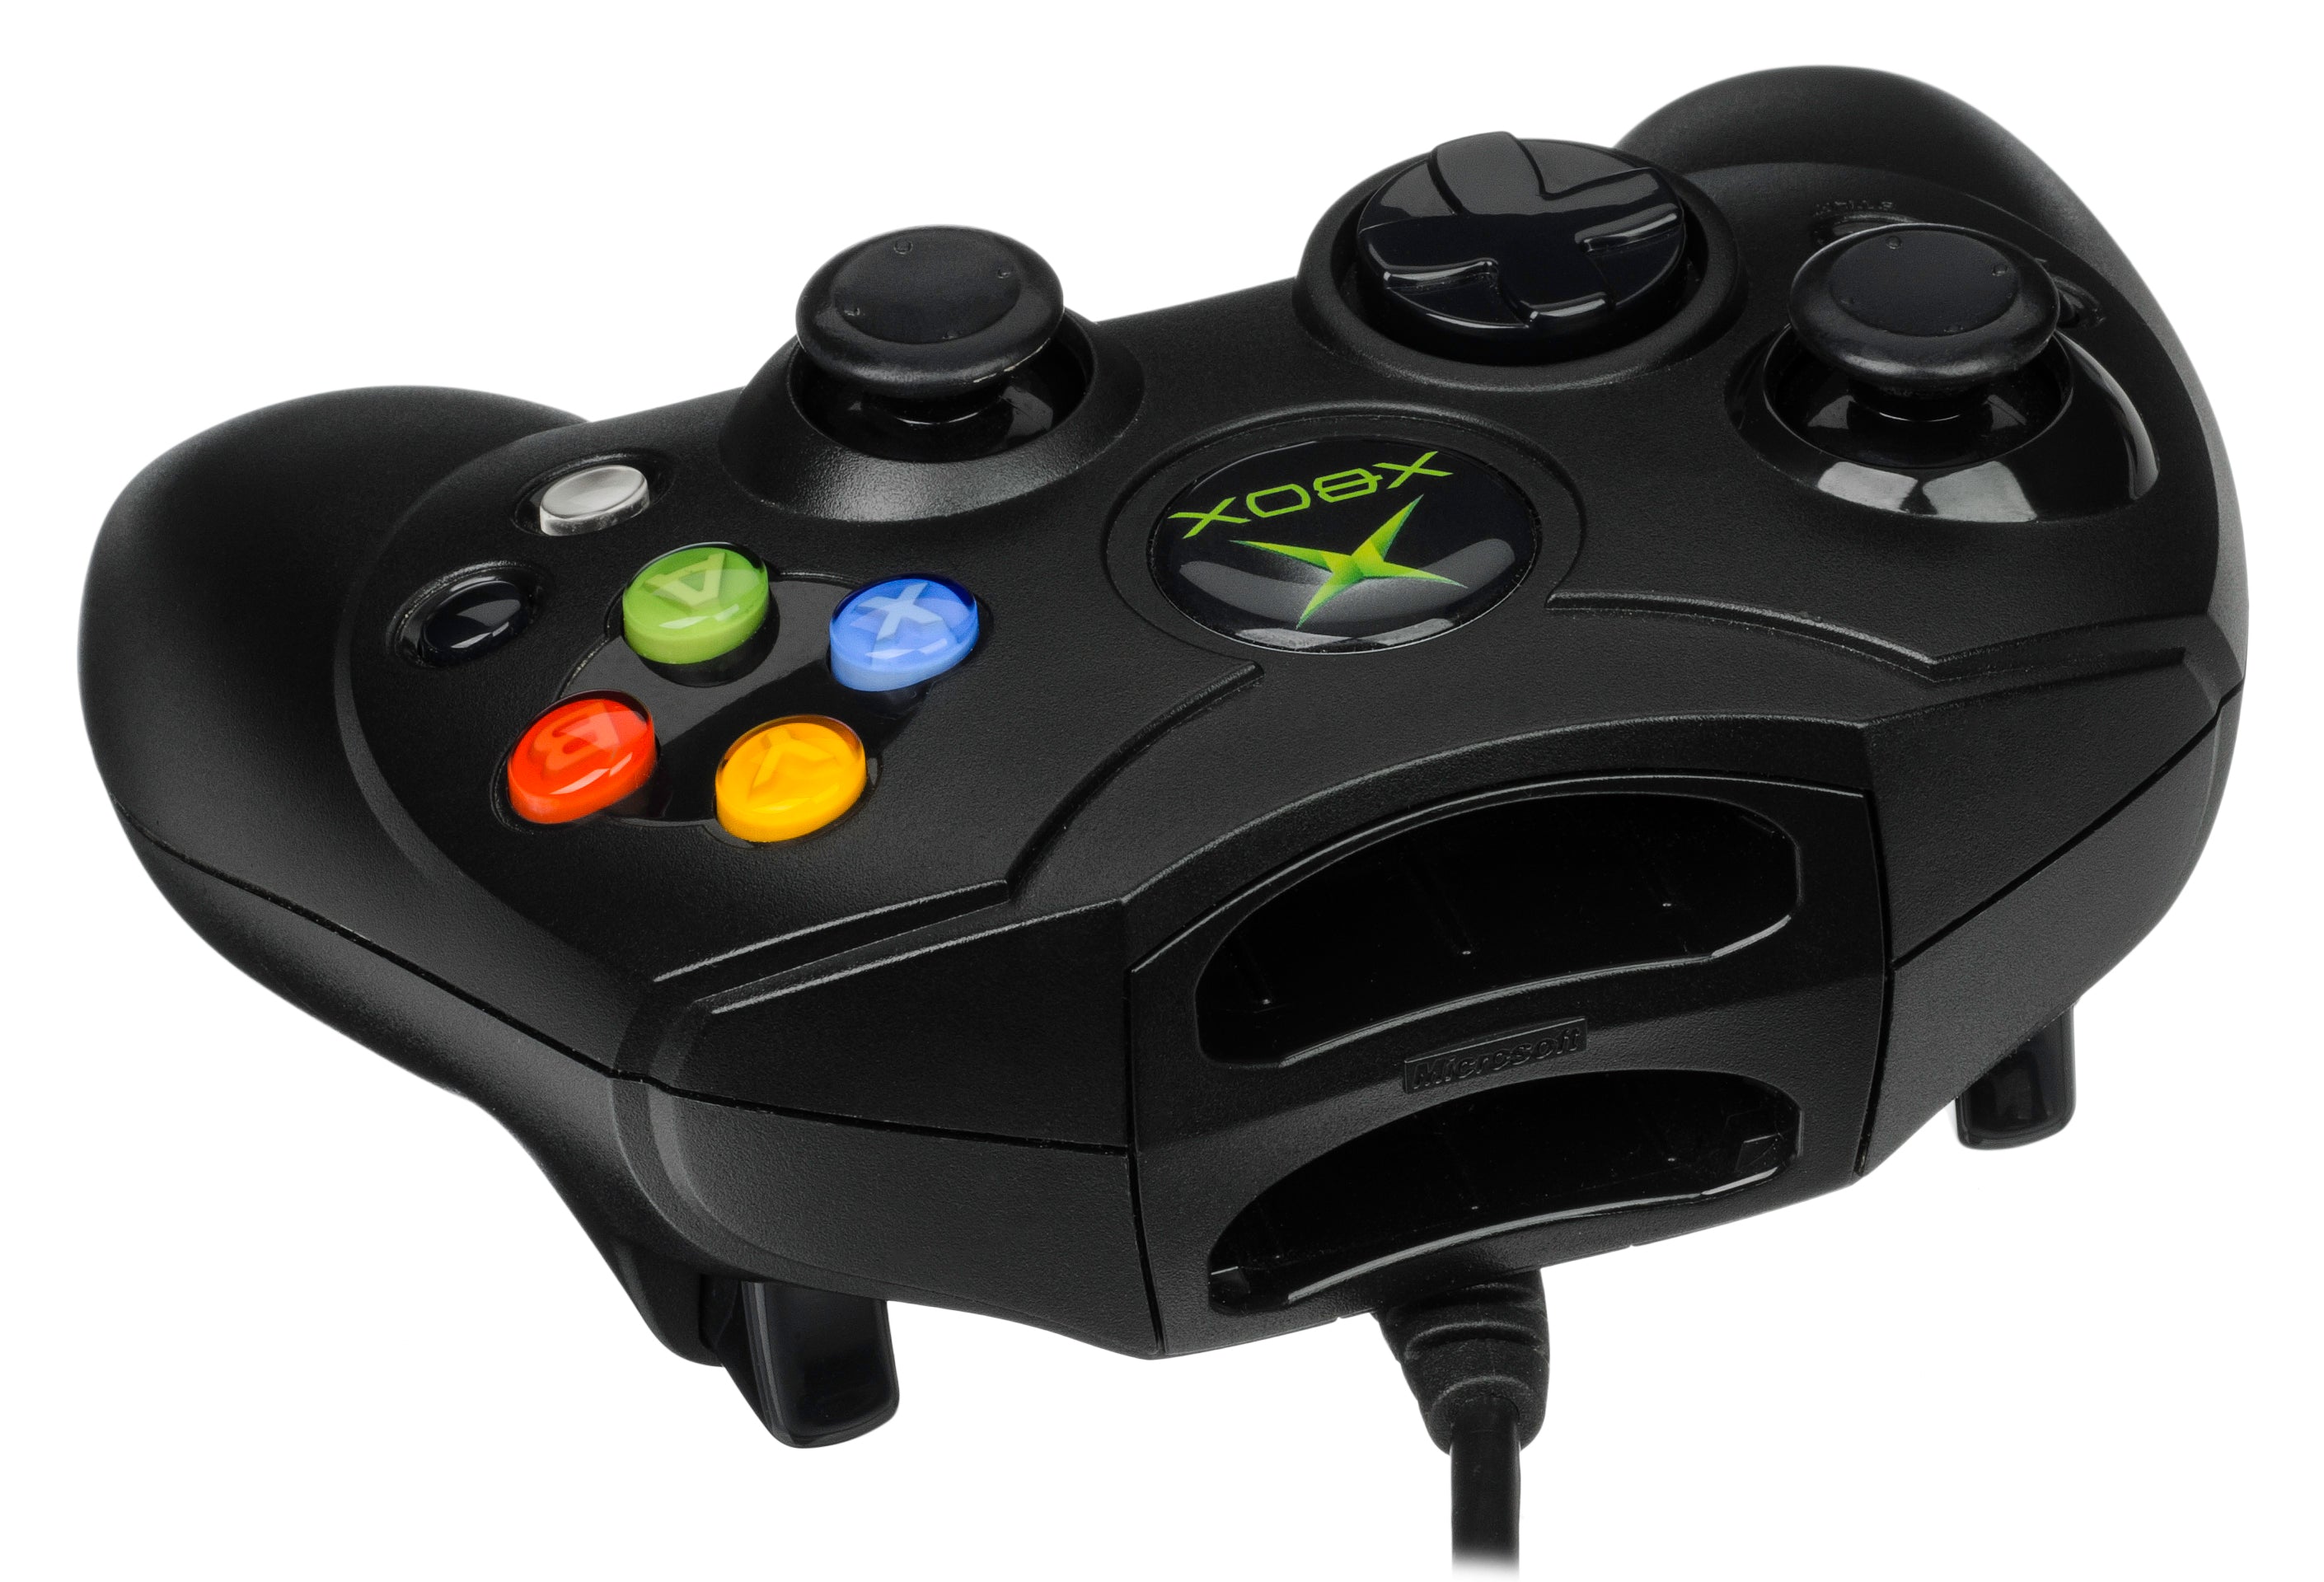 Original Xbox Controller S - Black